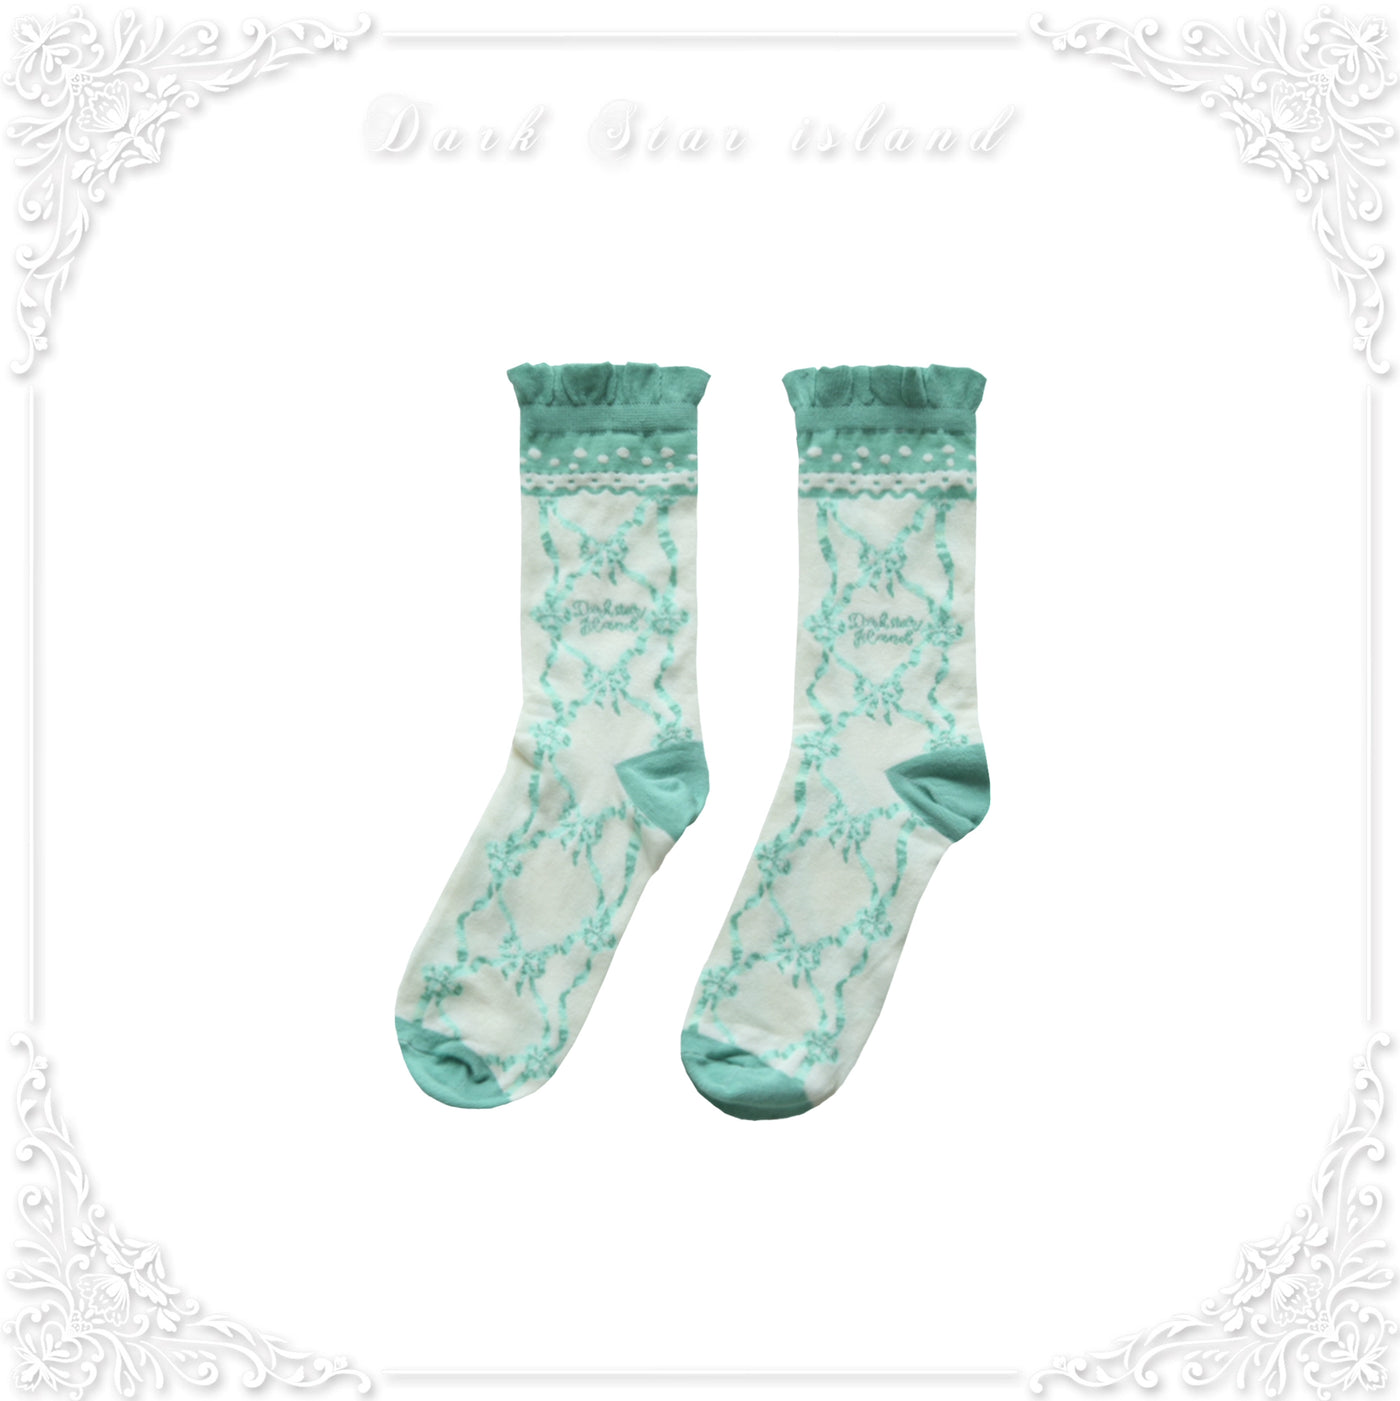 Dark Star Island~Kawaii Lolita Dress OP Blouse SK Set Free size Mint-ivory knitted cotton socks 